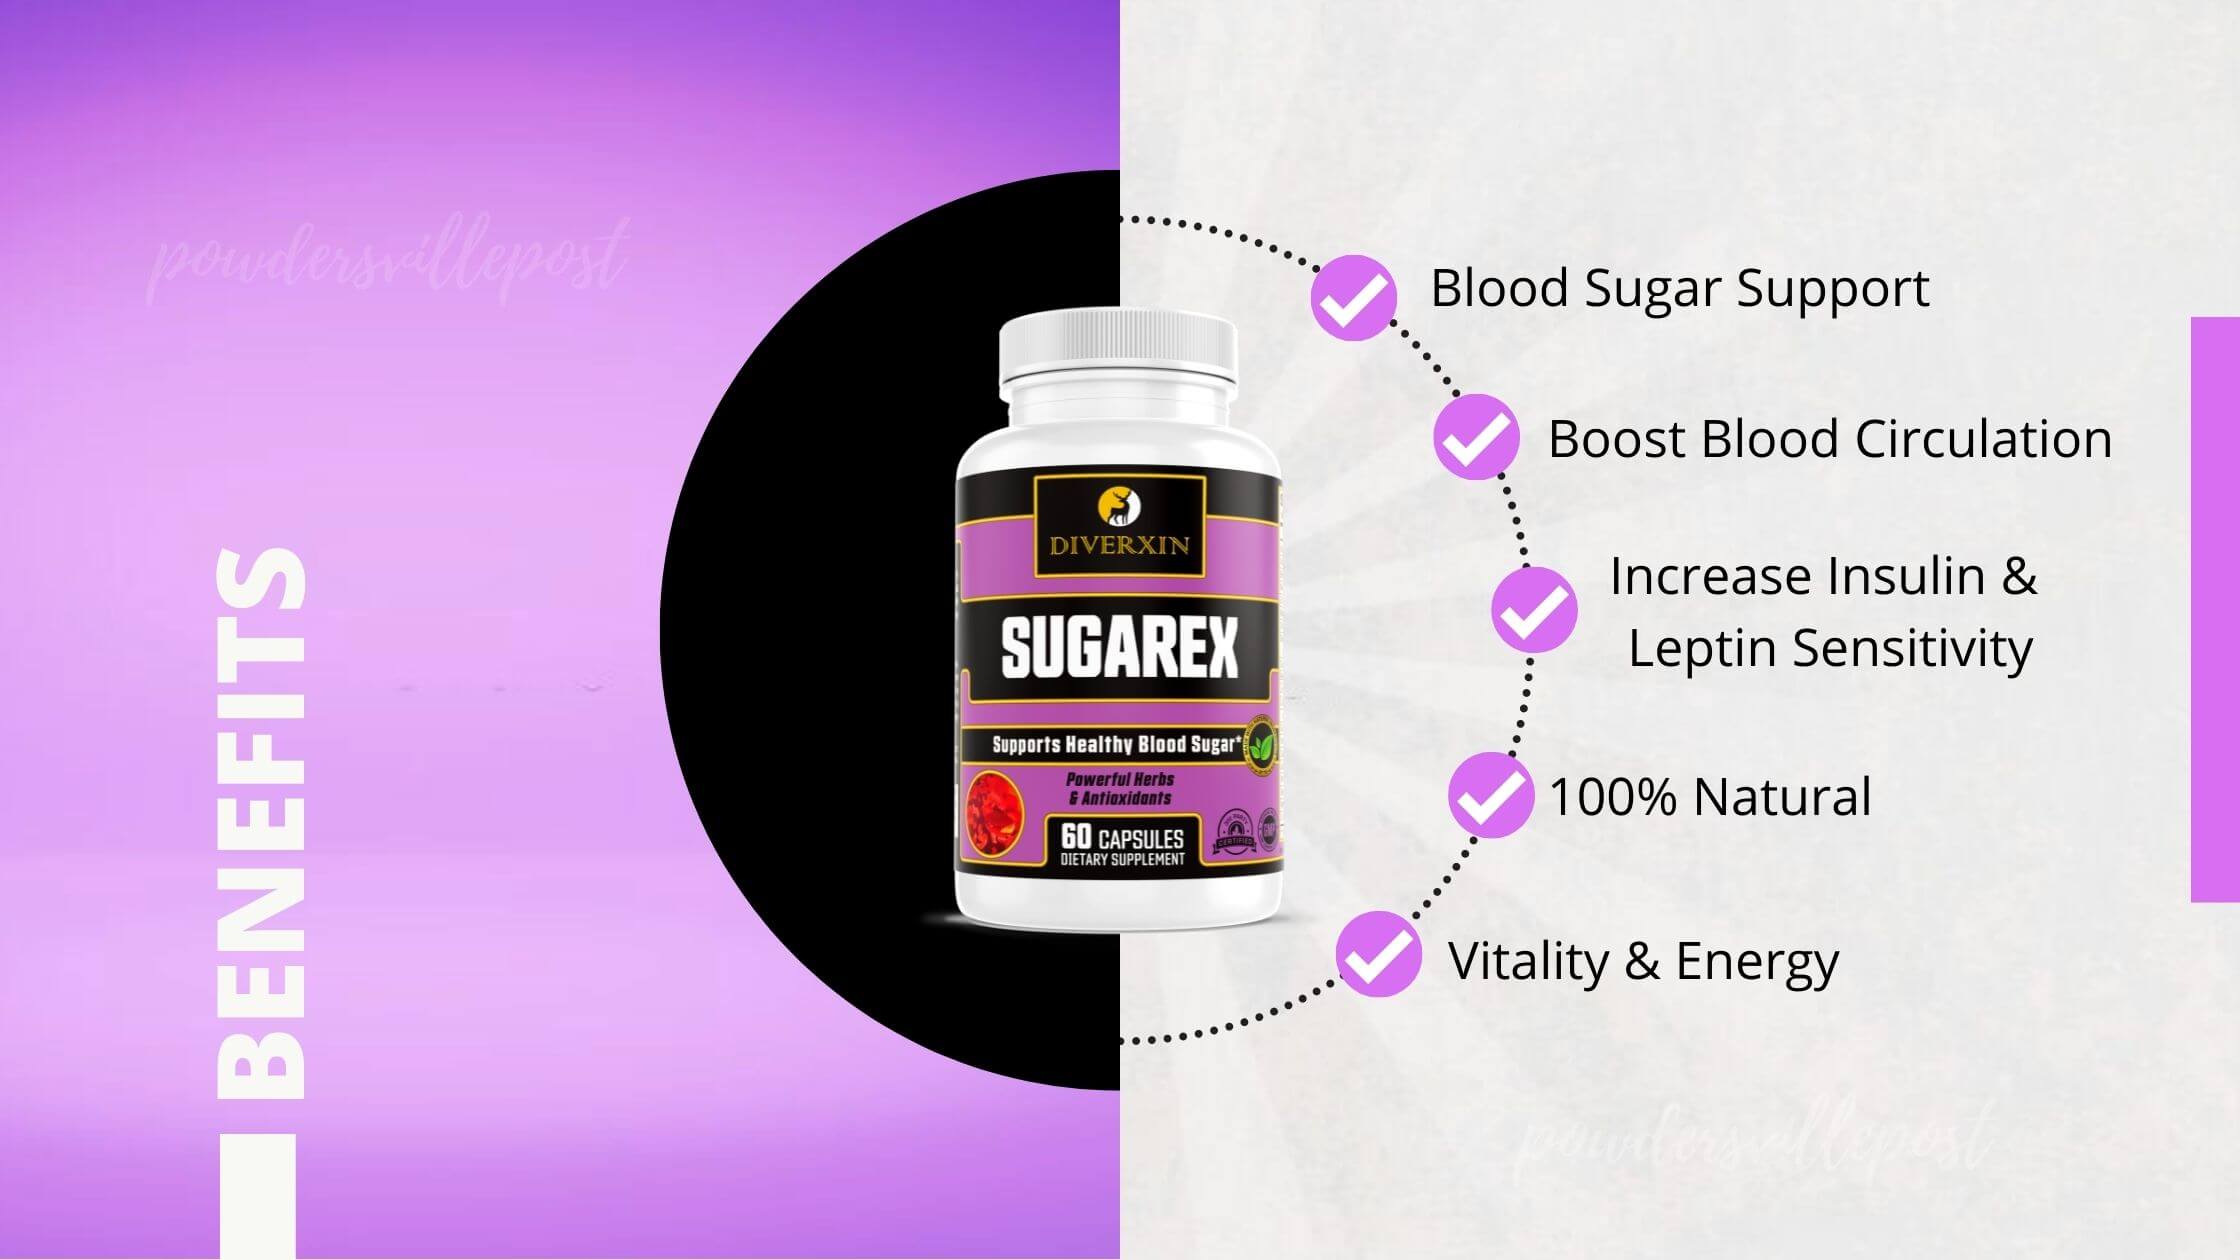 Diverxin SugaRex Benefits